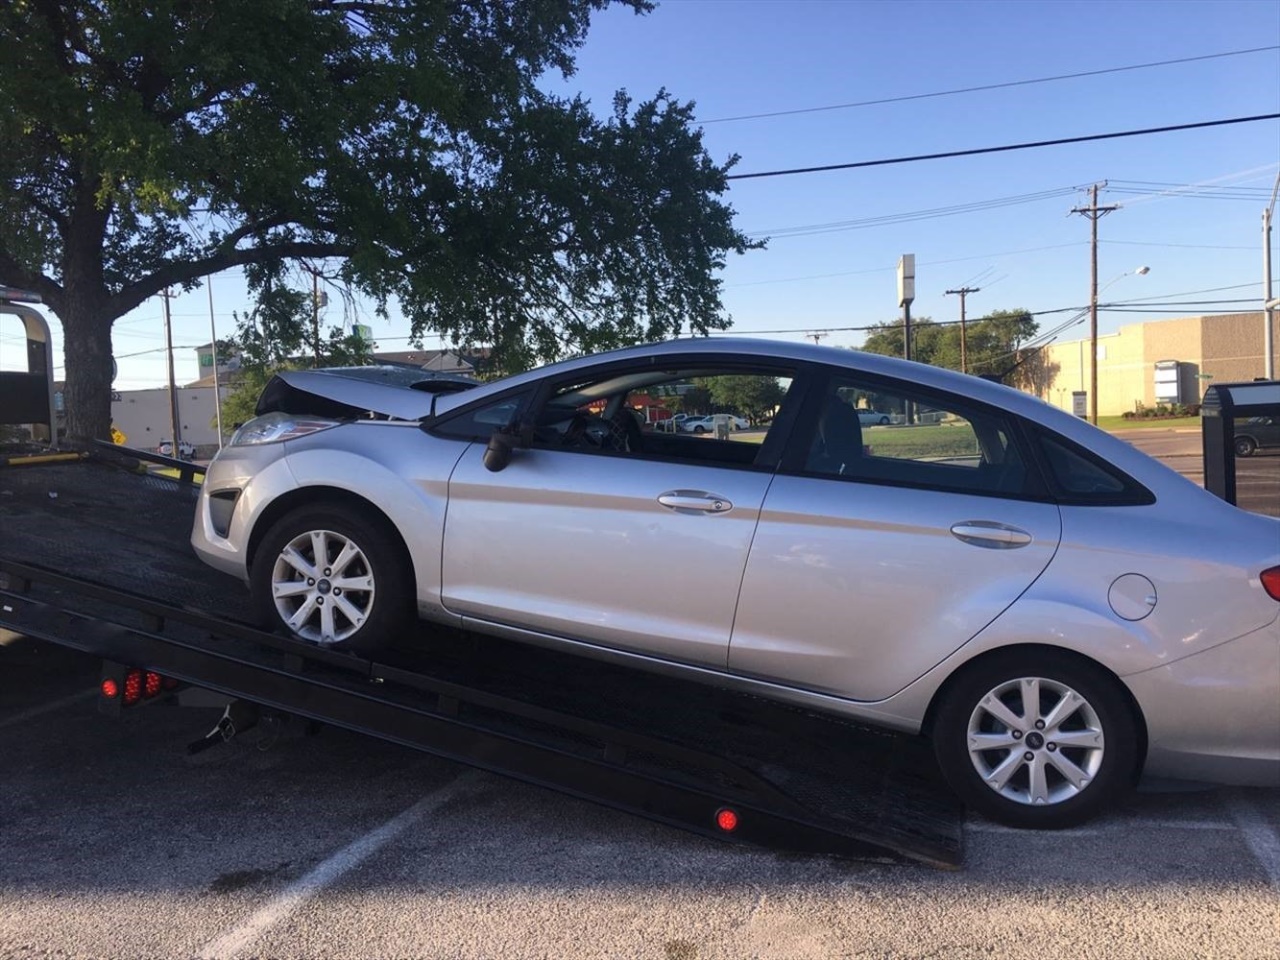 Junk Car Pick Up Garland TX